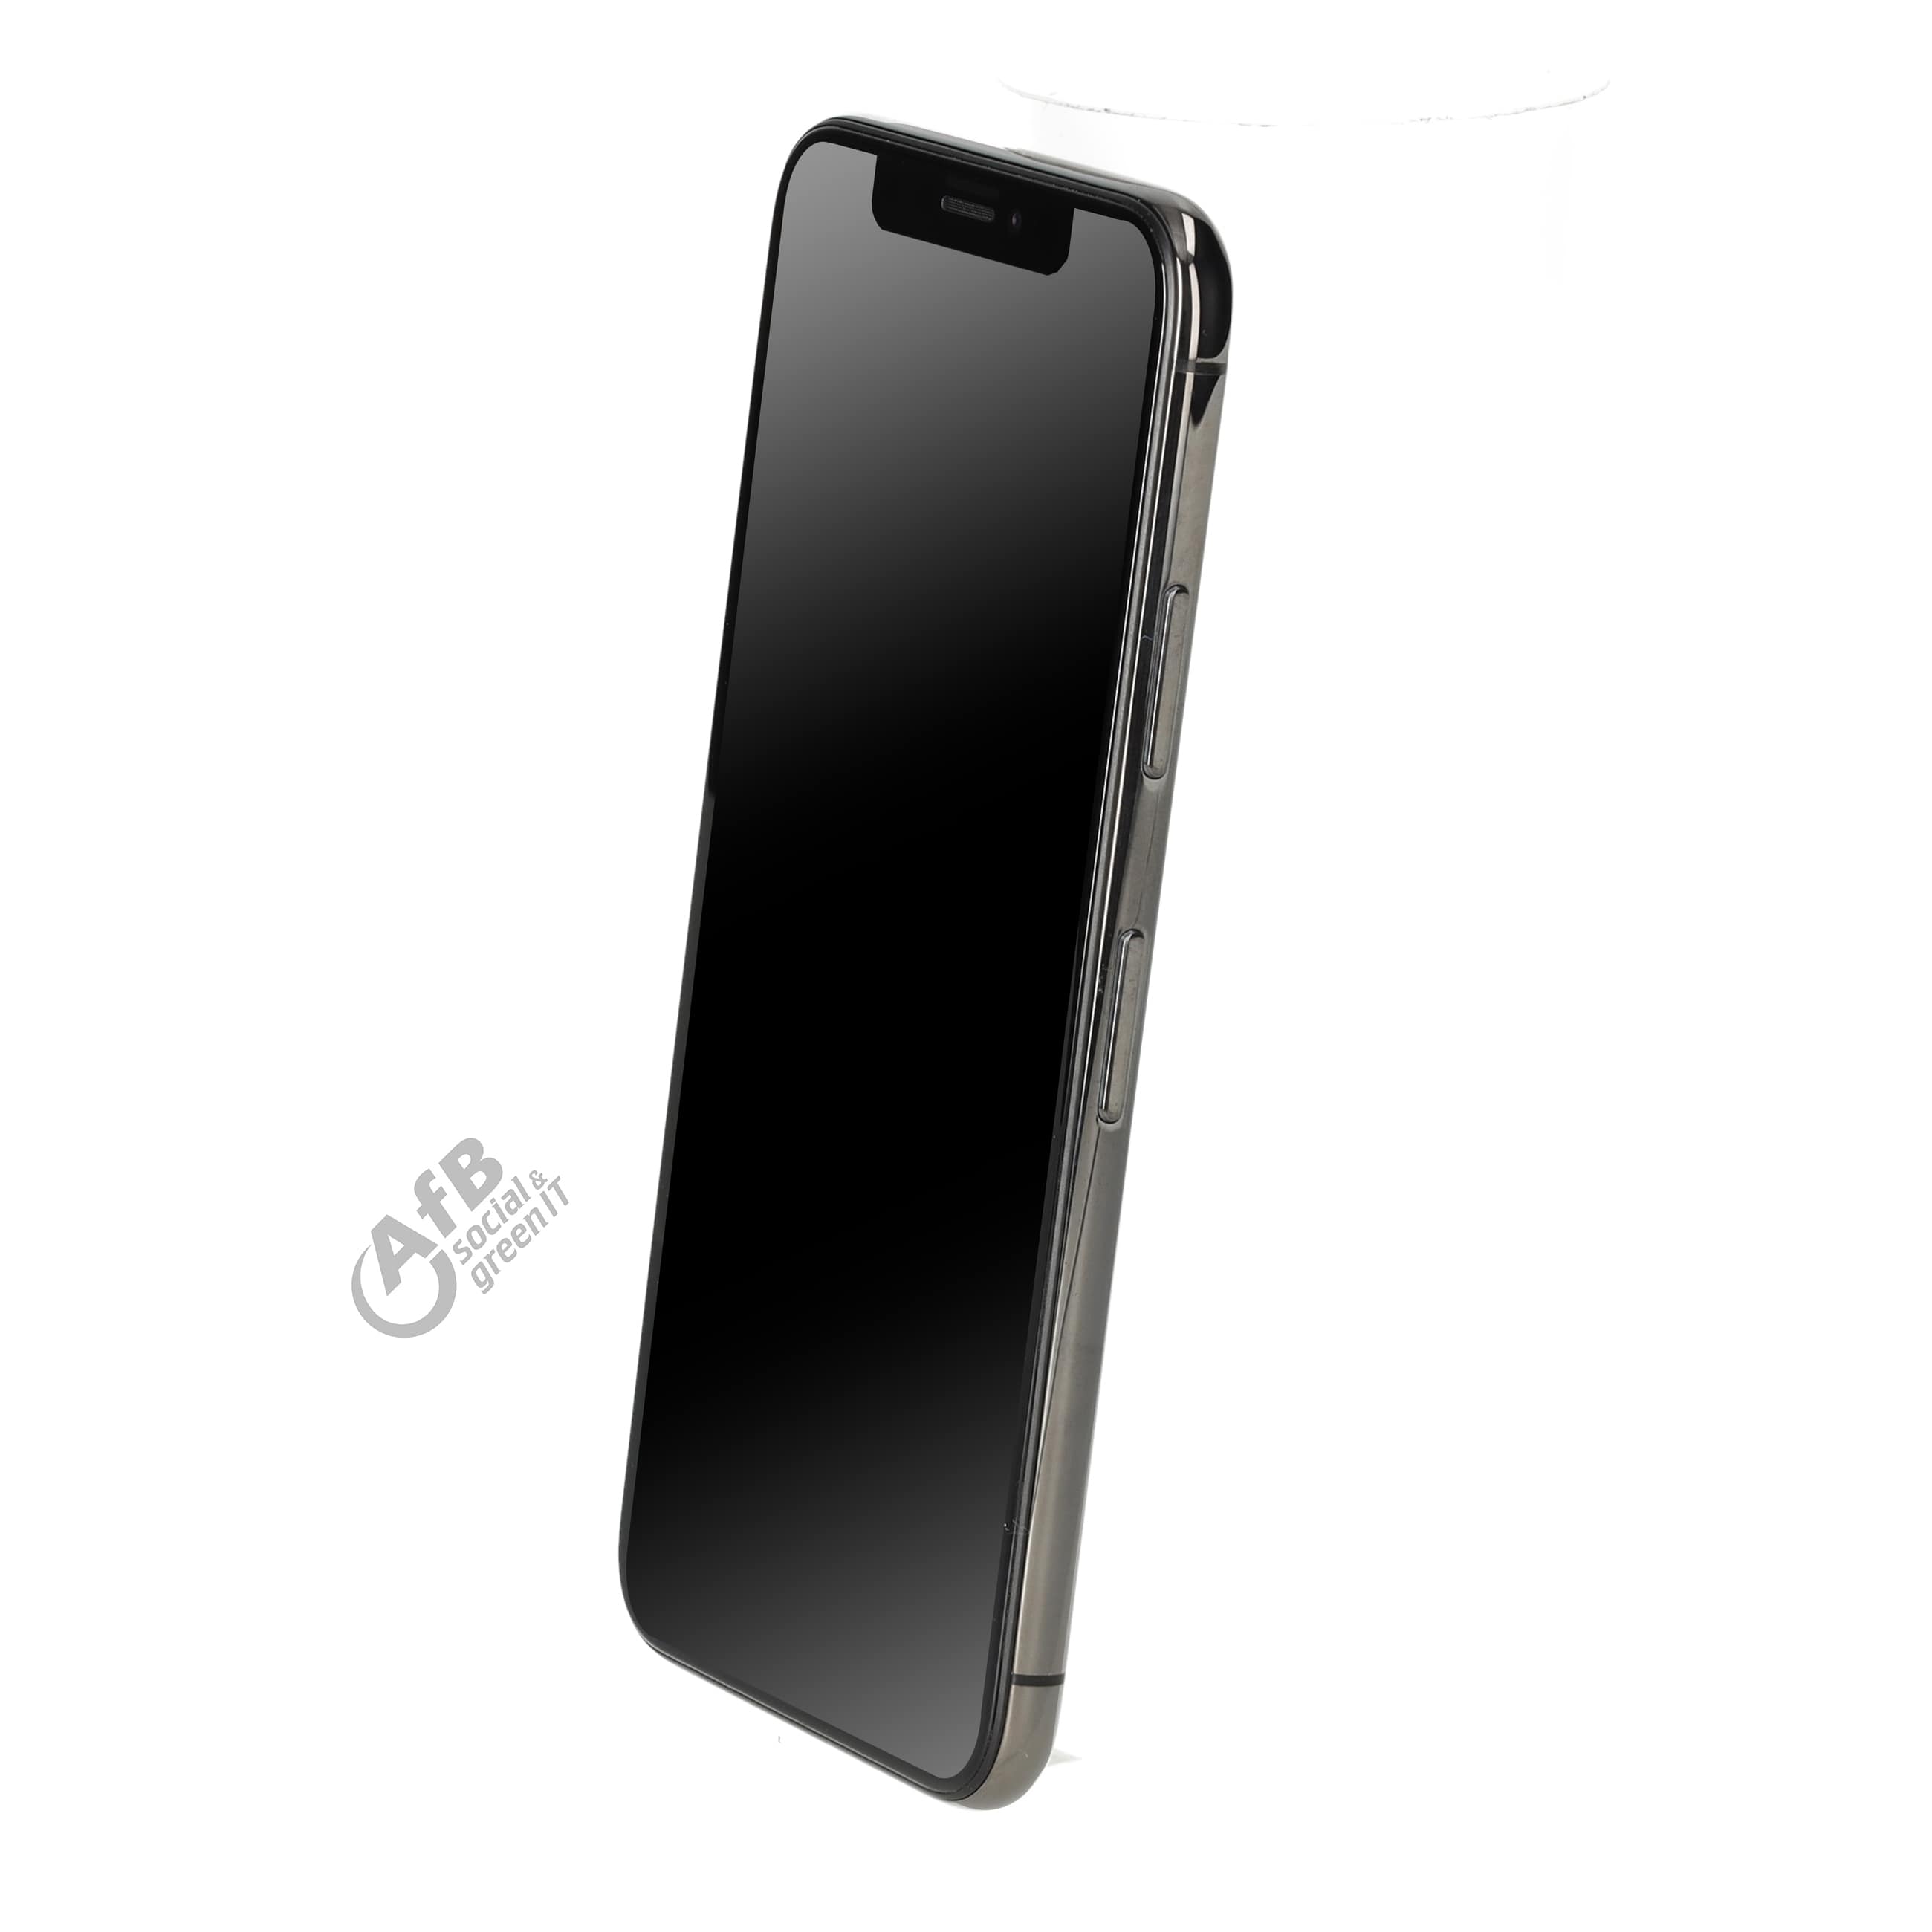 Apple iPhone X - 64 GB - Space Gray - Single-SIM